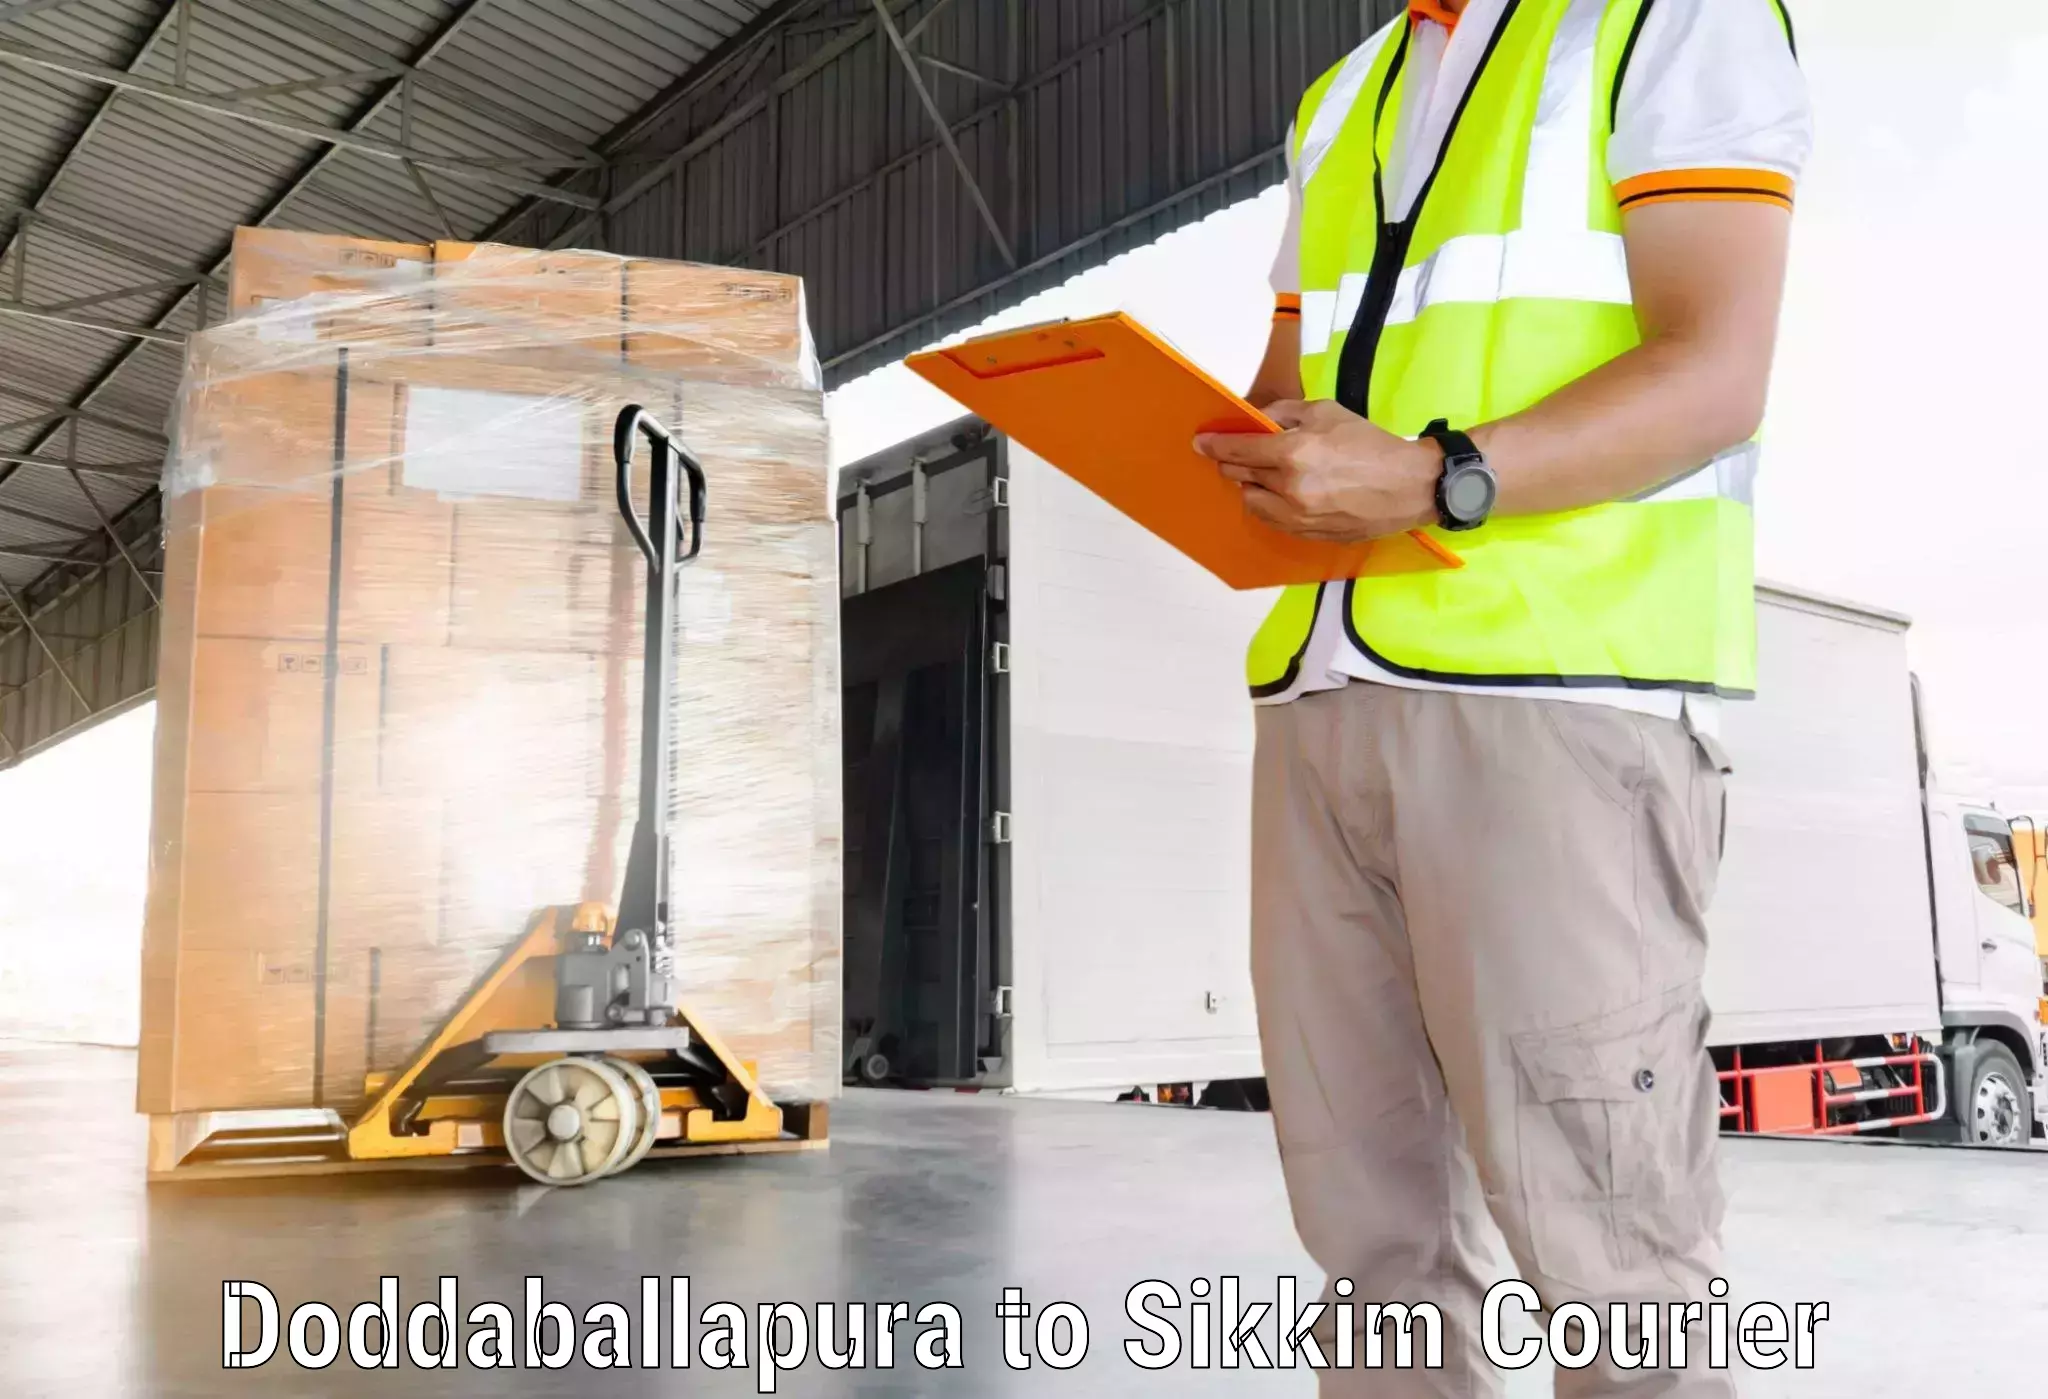 Speedy delivery service Doddaballapura to North Sikkim